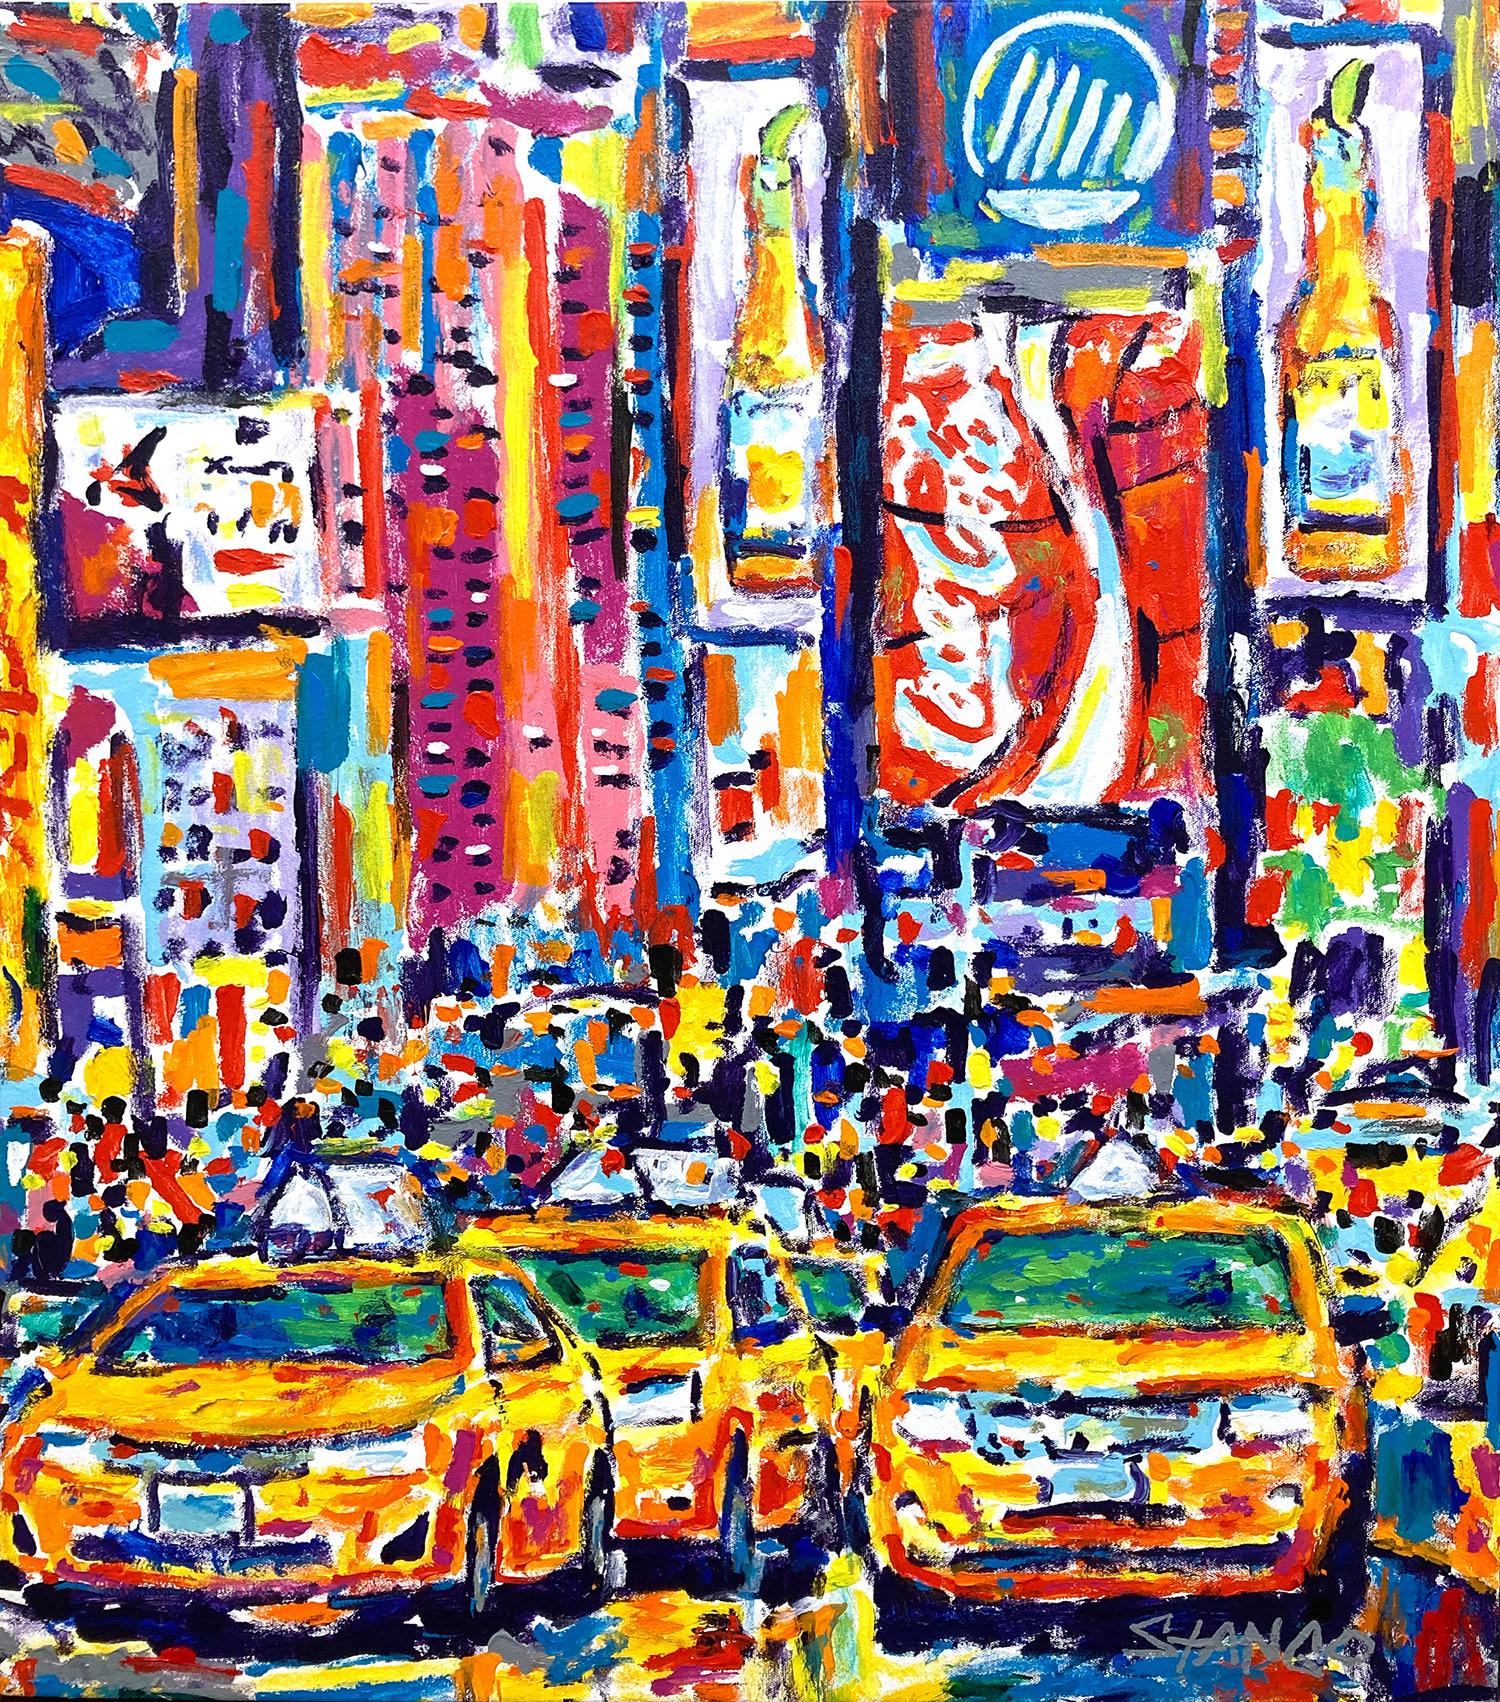 John Stango Abstract Painting – „Times Square“ Buntes Gemälde auf Leinwand, Midtown Manhattan, NYC, farbenfrohe Pop-Art-Szene